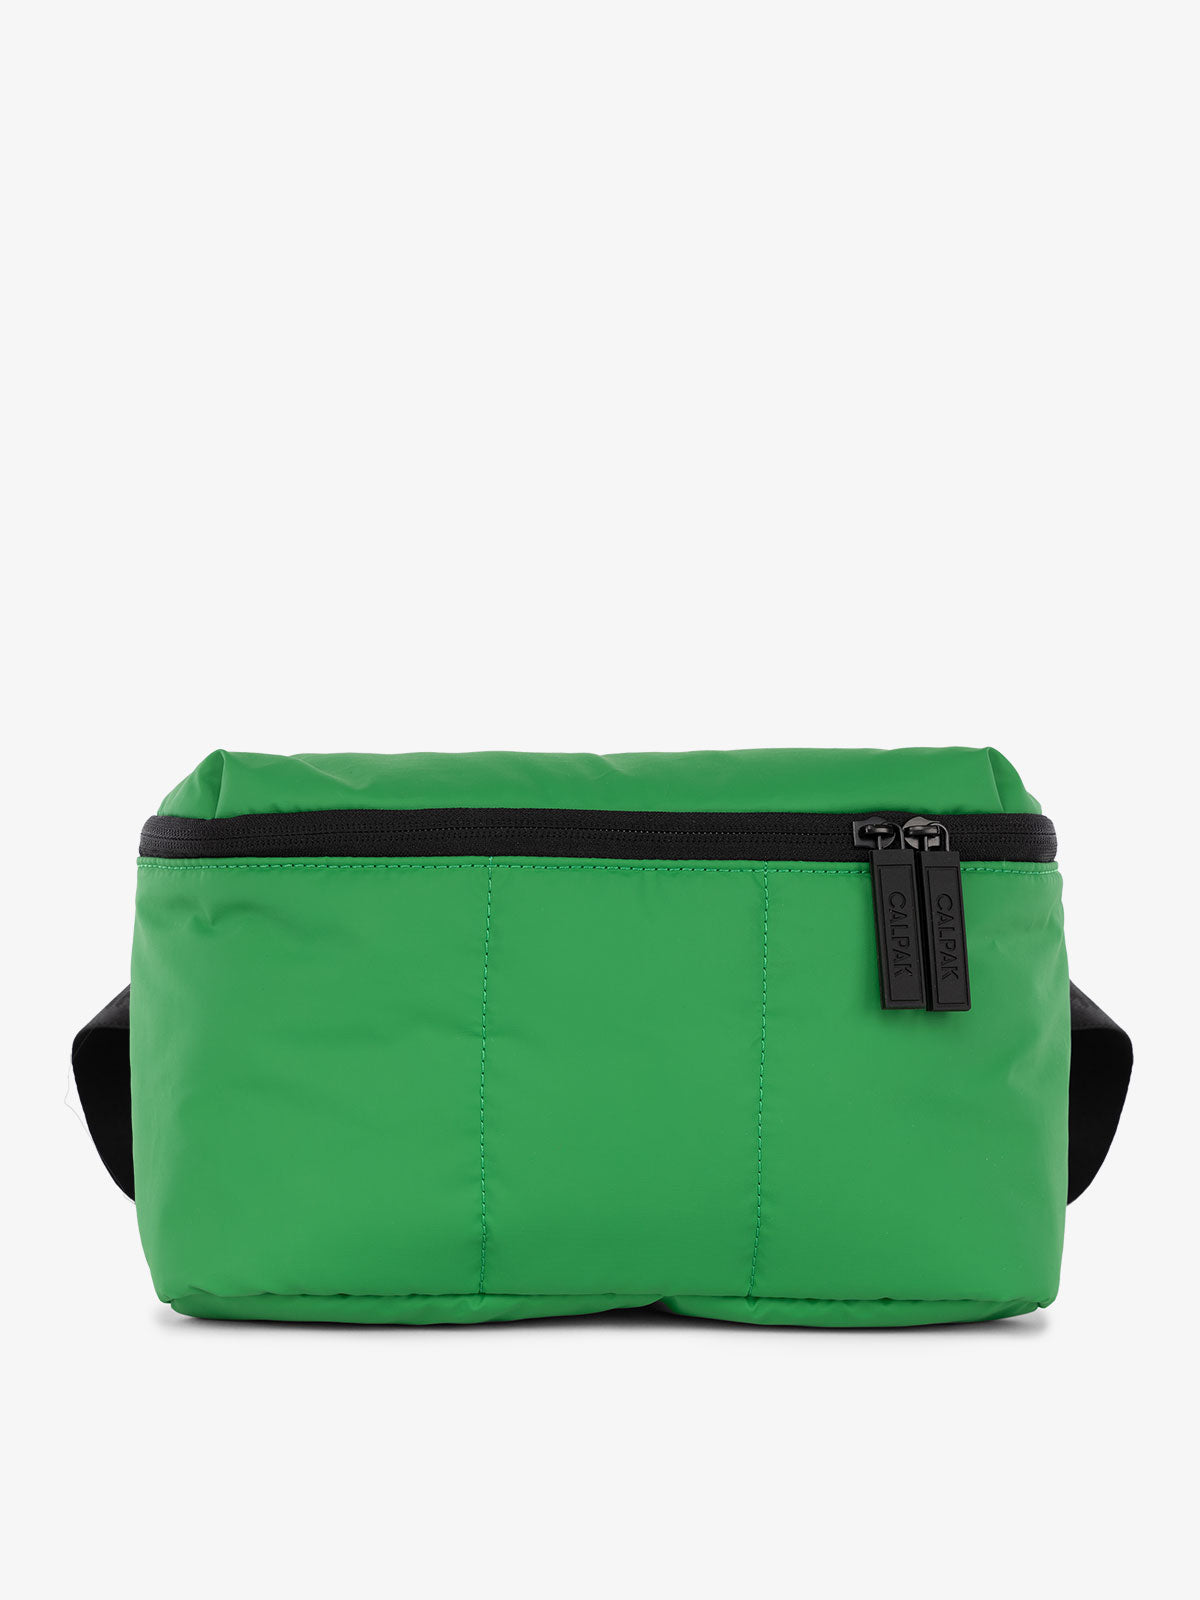 CALPAK Luka Belt Bag with soft puffy exterior in green apple